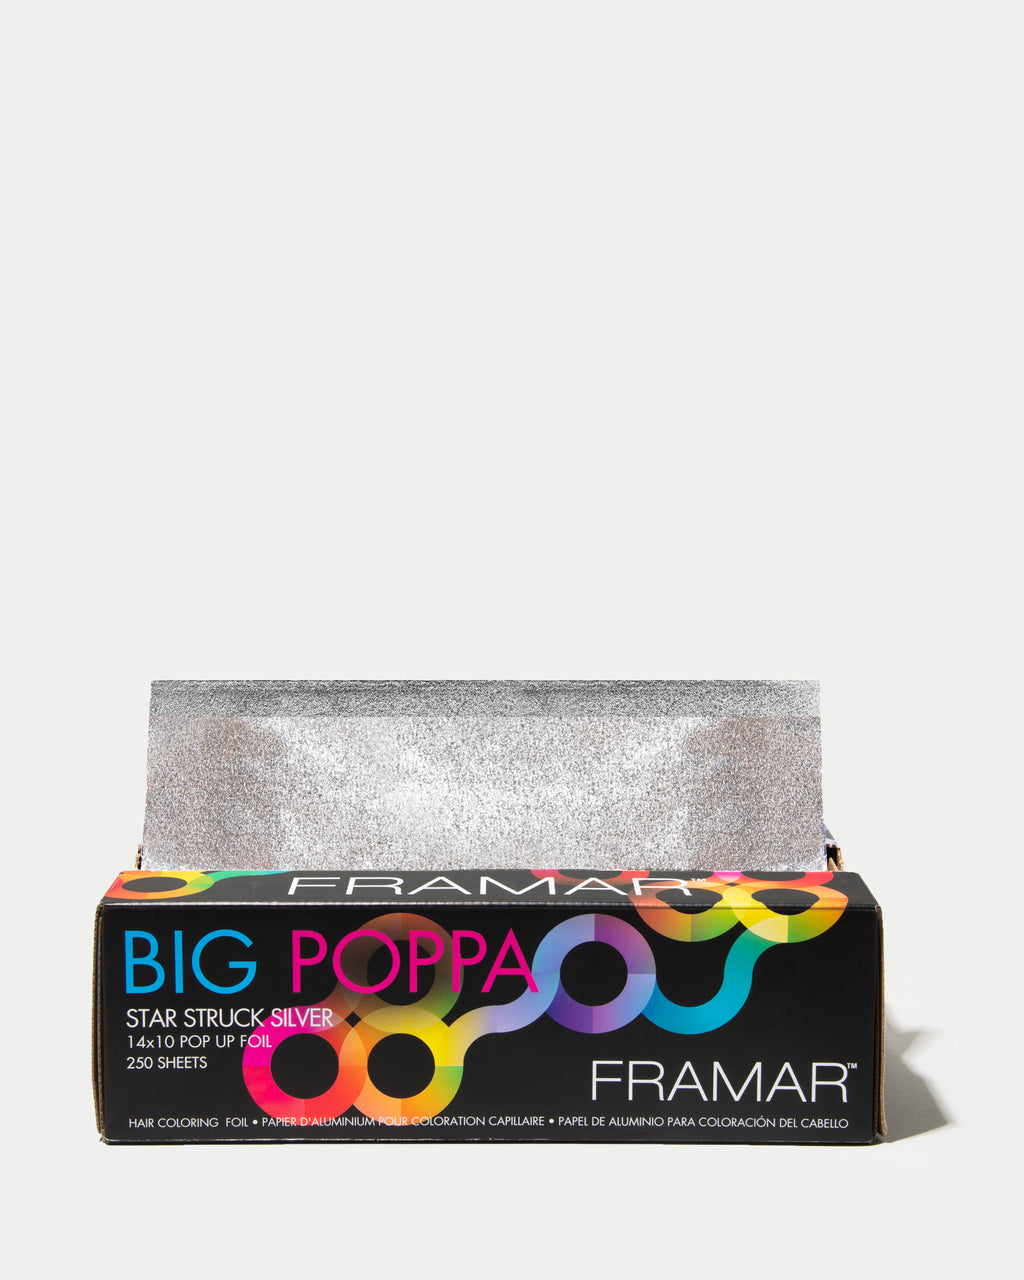 Framar Big Poppa - Extra Wide Pop Up